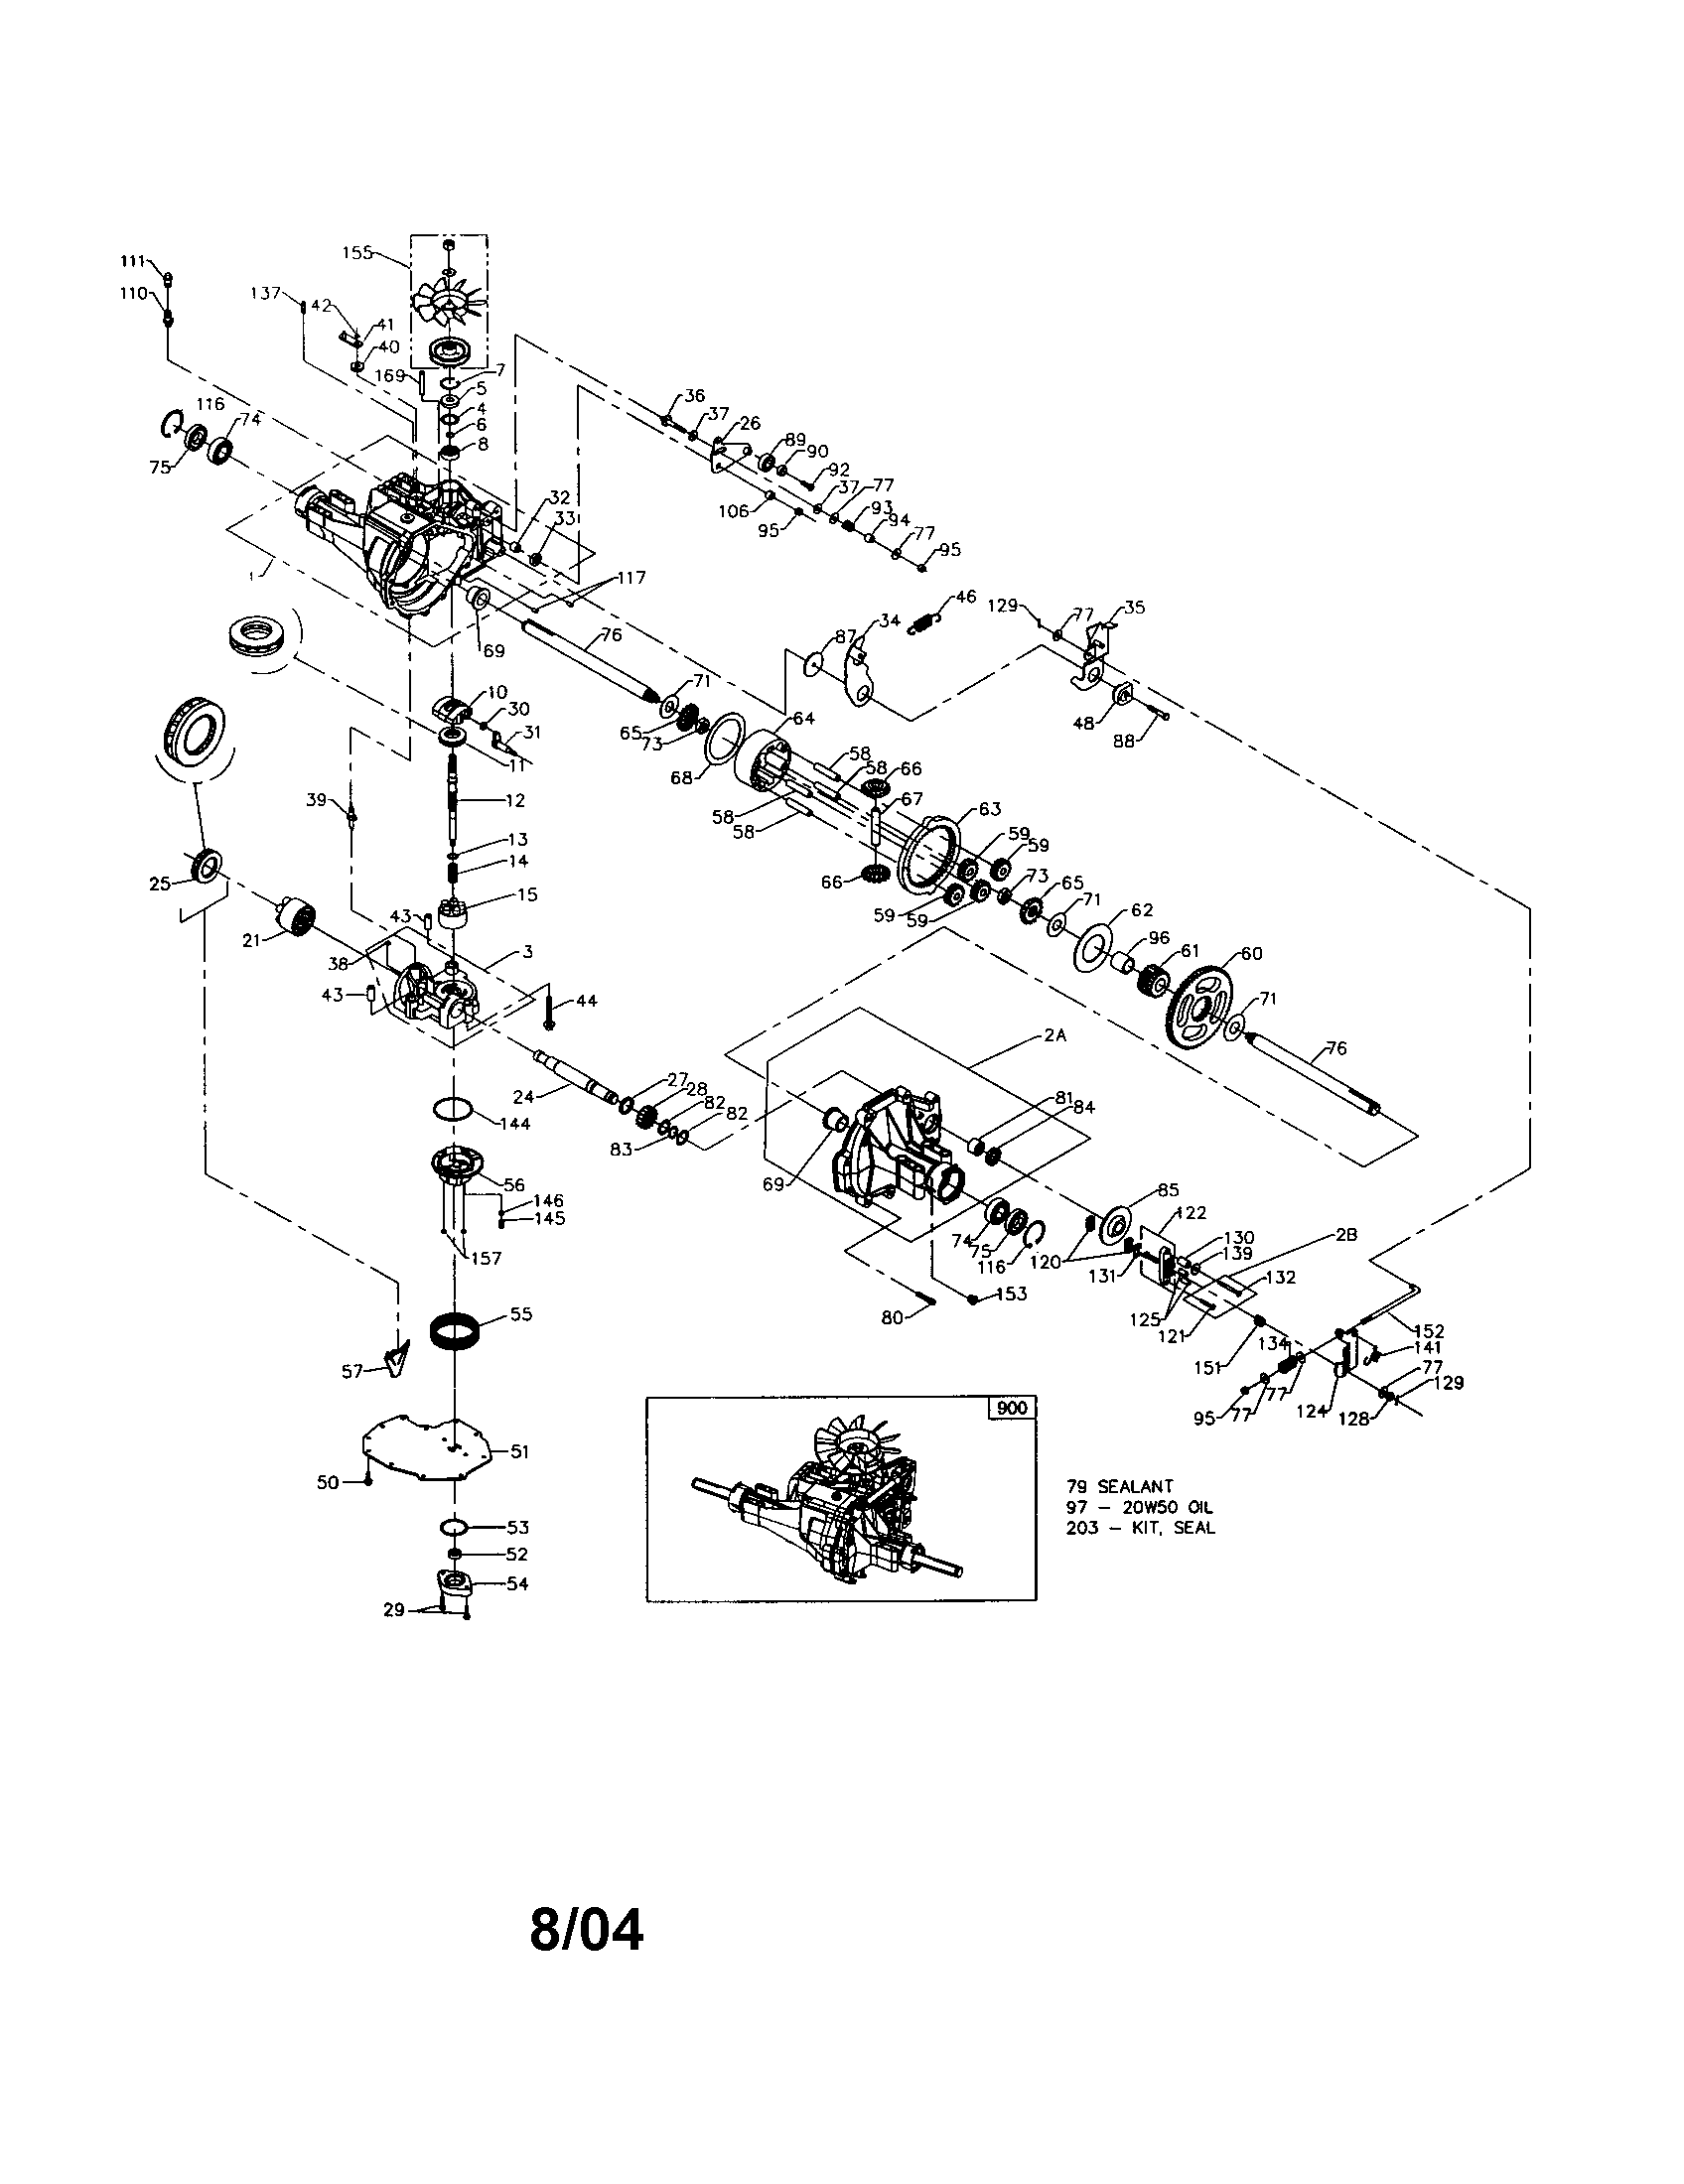 detailed wiring diagram 917.288070 lawn mower